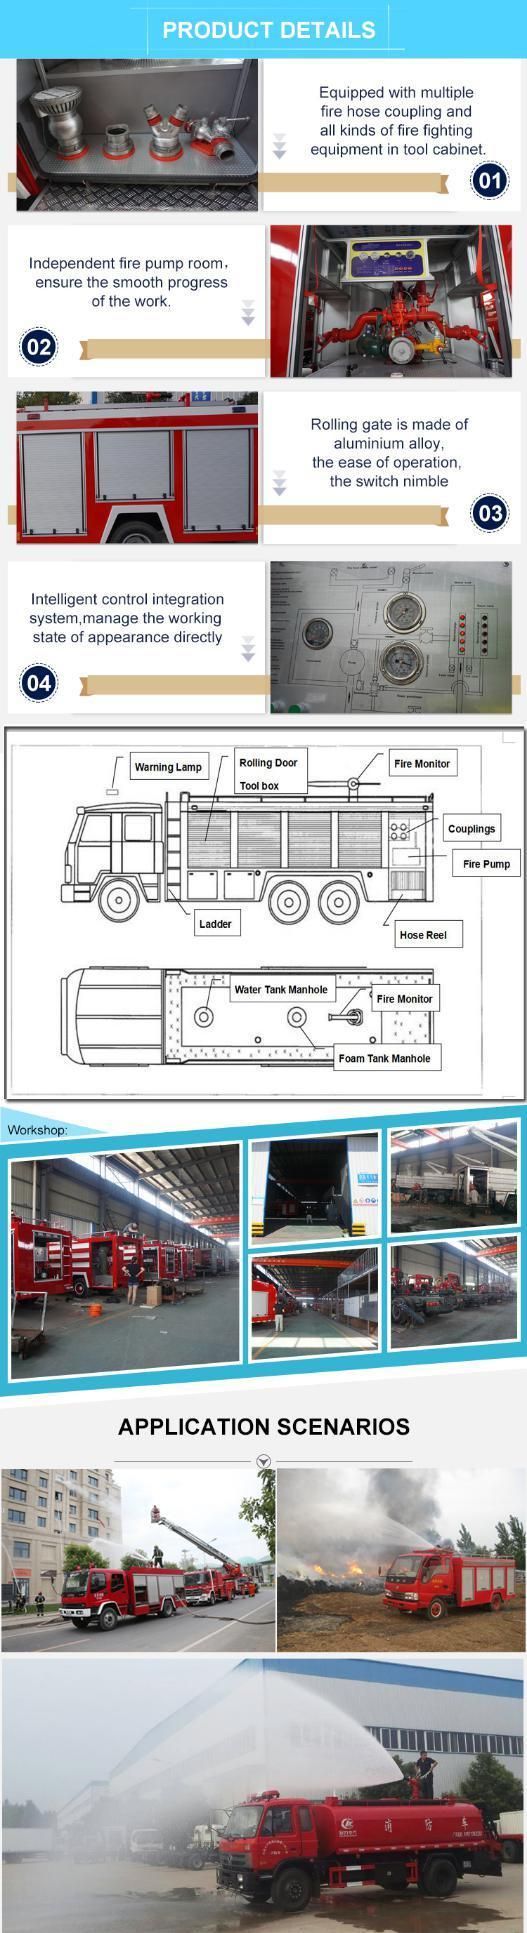 Sinotruk HOWO 266HP 8000L Water Fire Engine Fire Fighting Truck